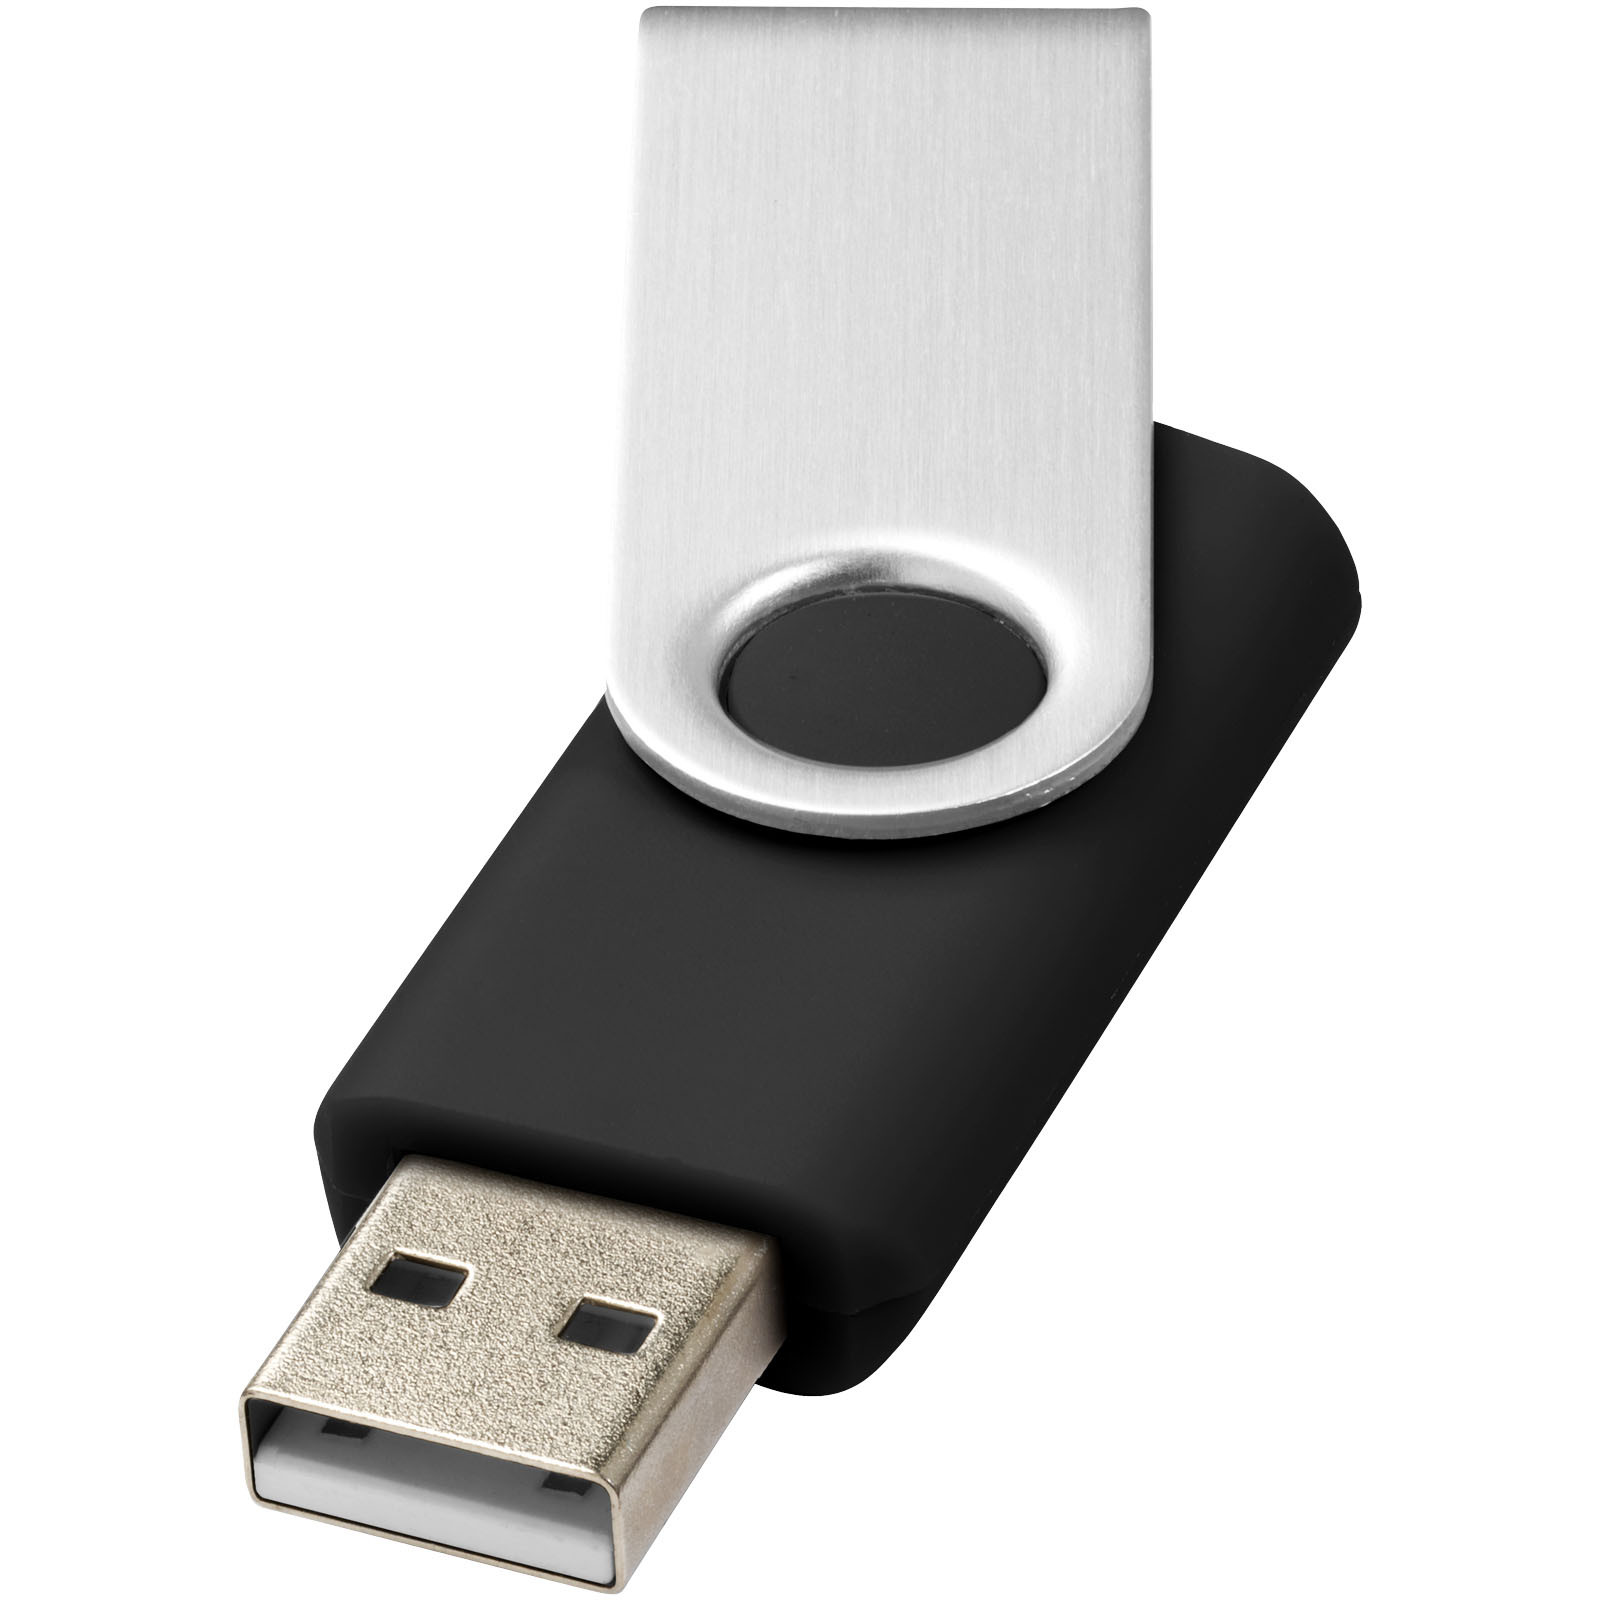 Chiavetta USB Rotate-basic da 8 GB